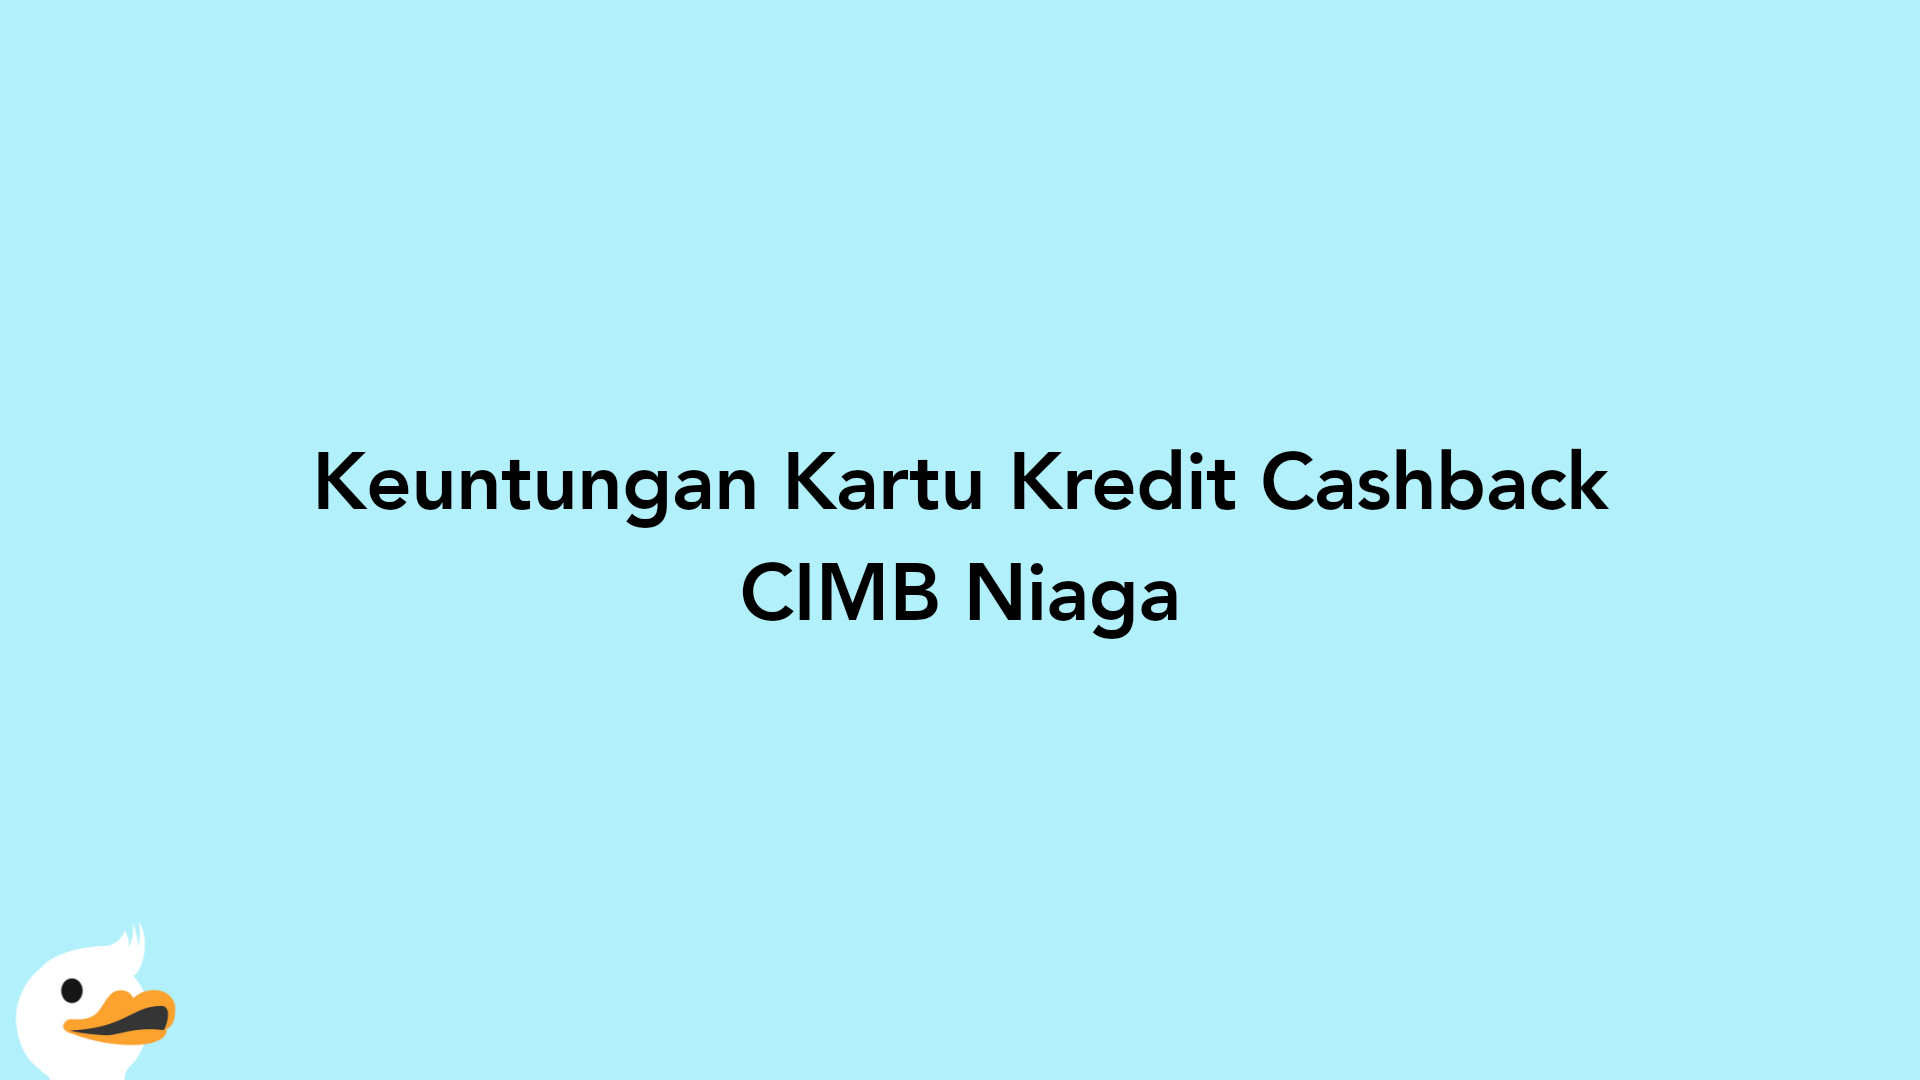 Keuntungan Kartu Kredit Cashback CIMB Niaga